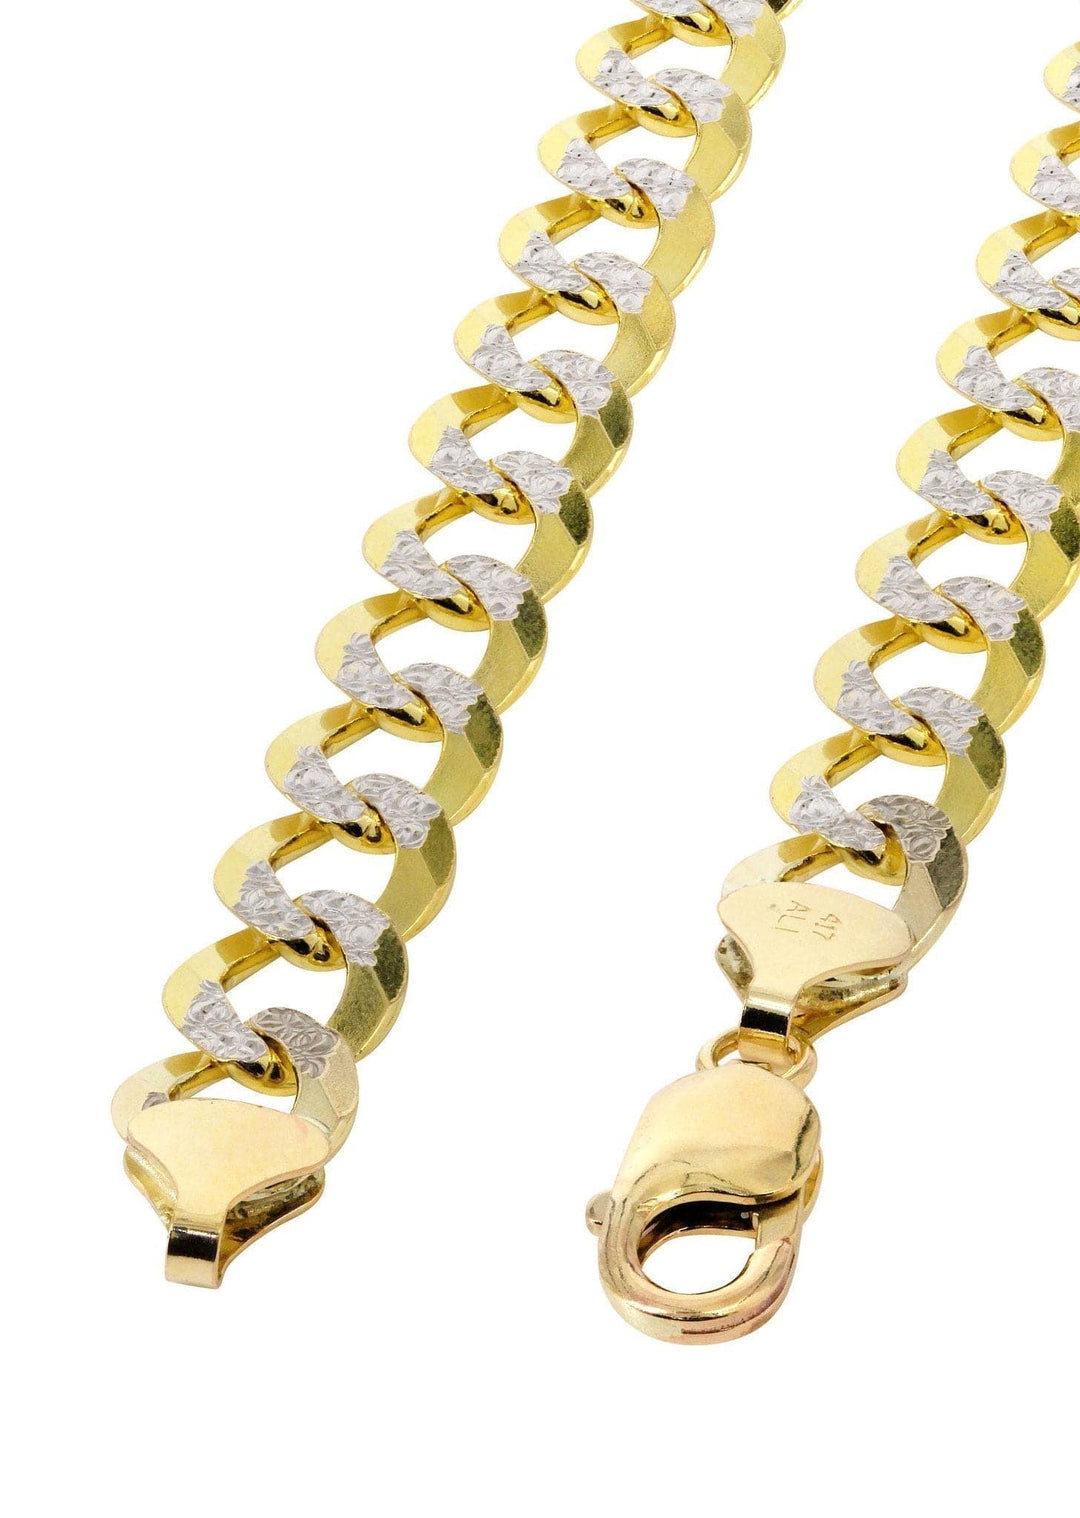 Gold Chain - Diamond Cut Cuban Link Chain 100% - 10K Gold